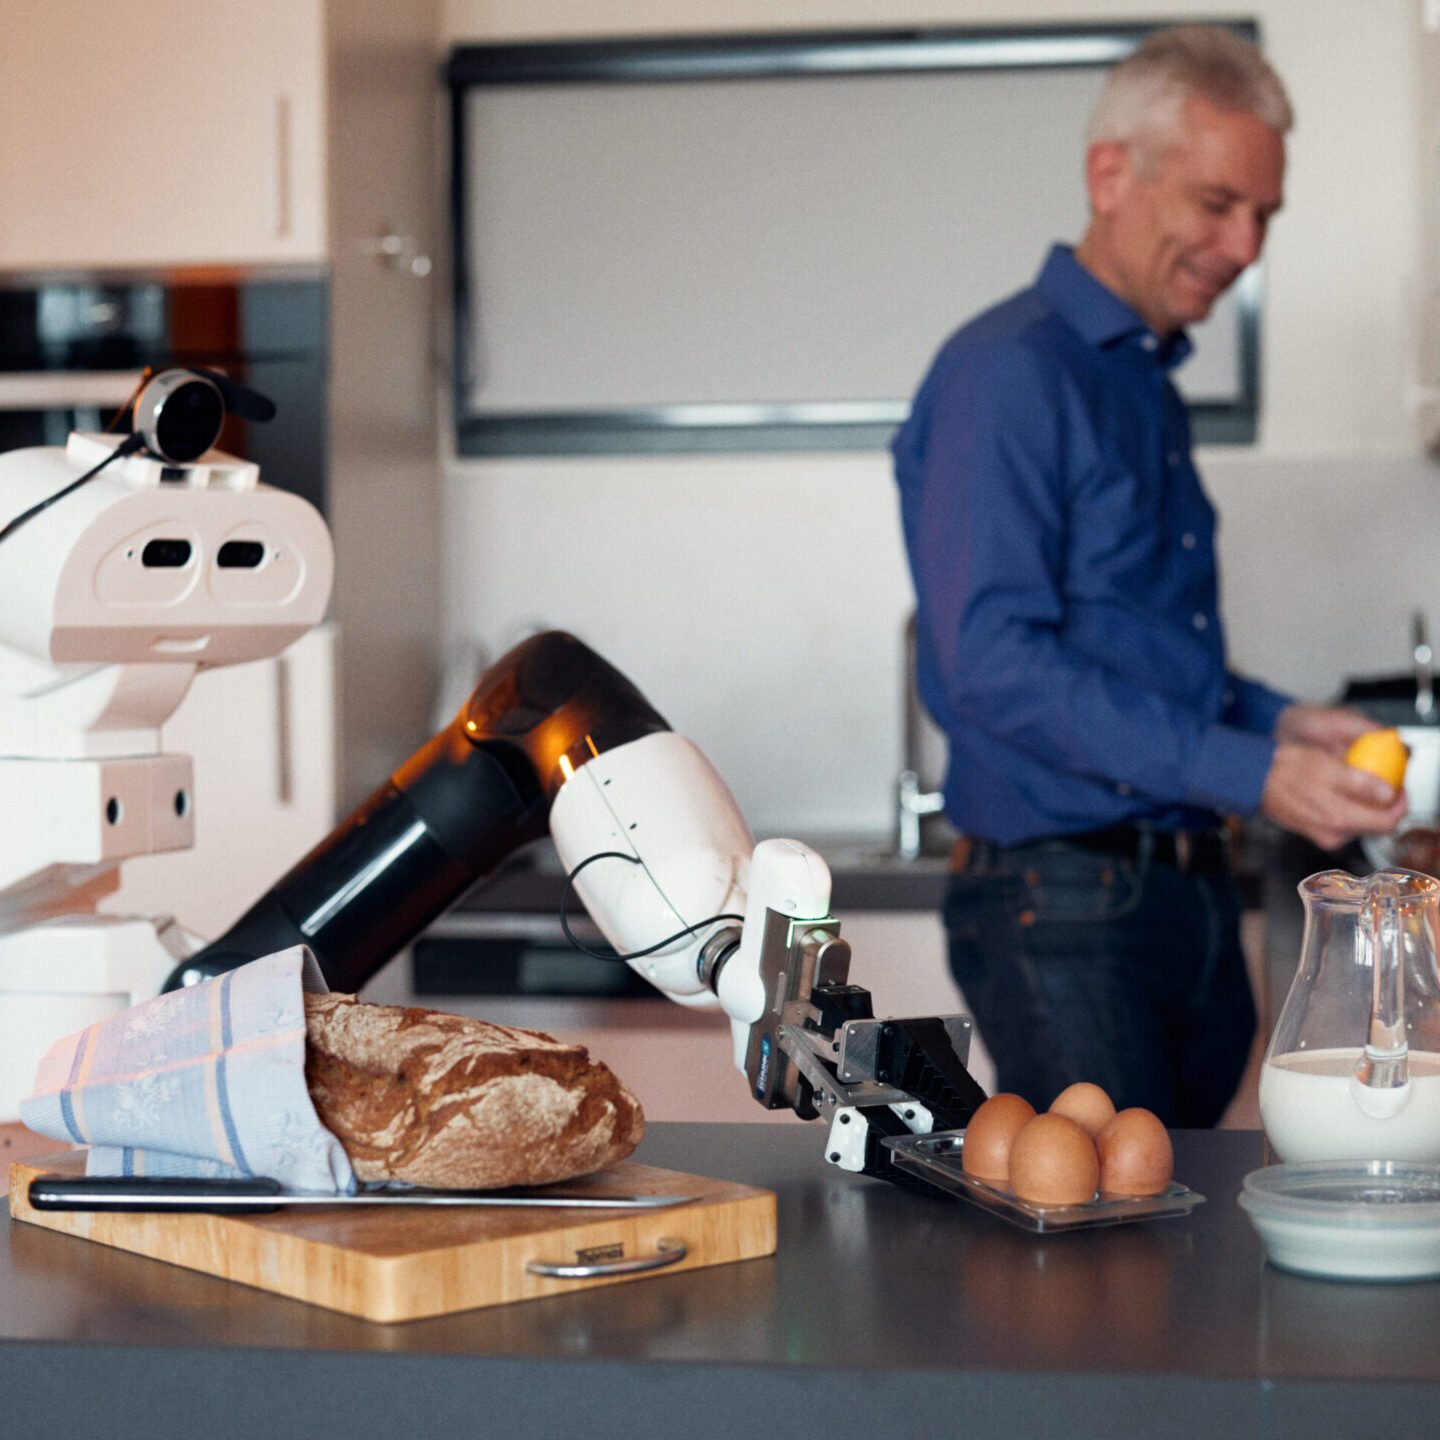 Roboter hilft beim Frühstück machen.